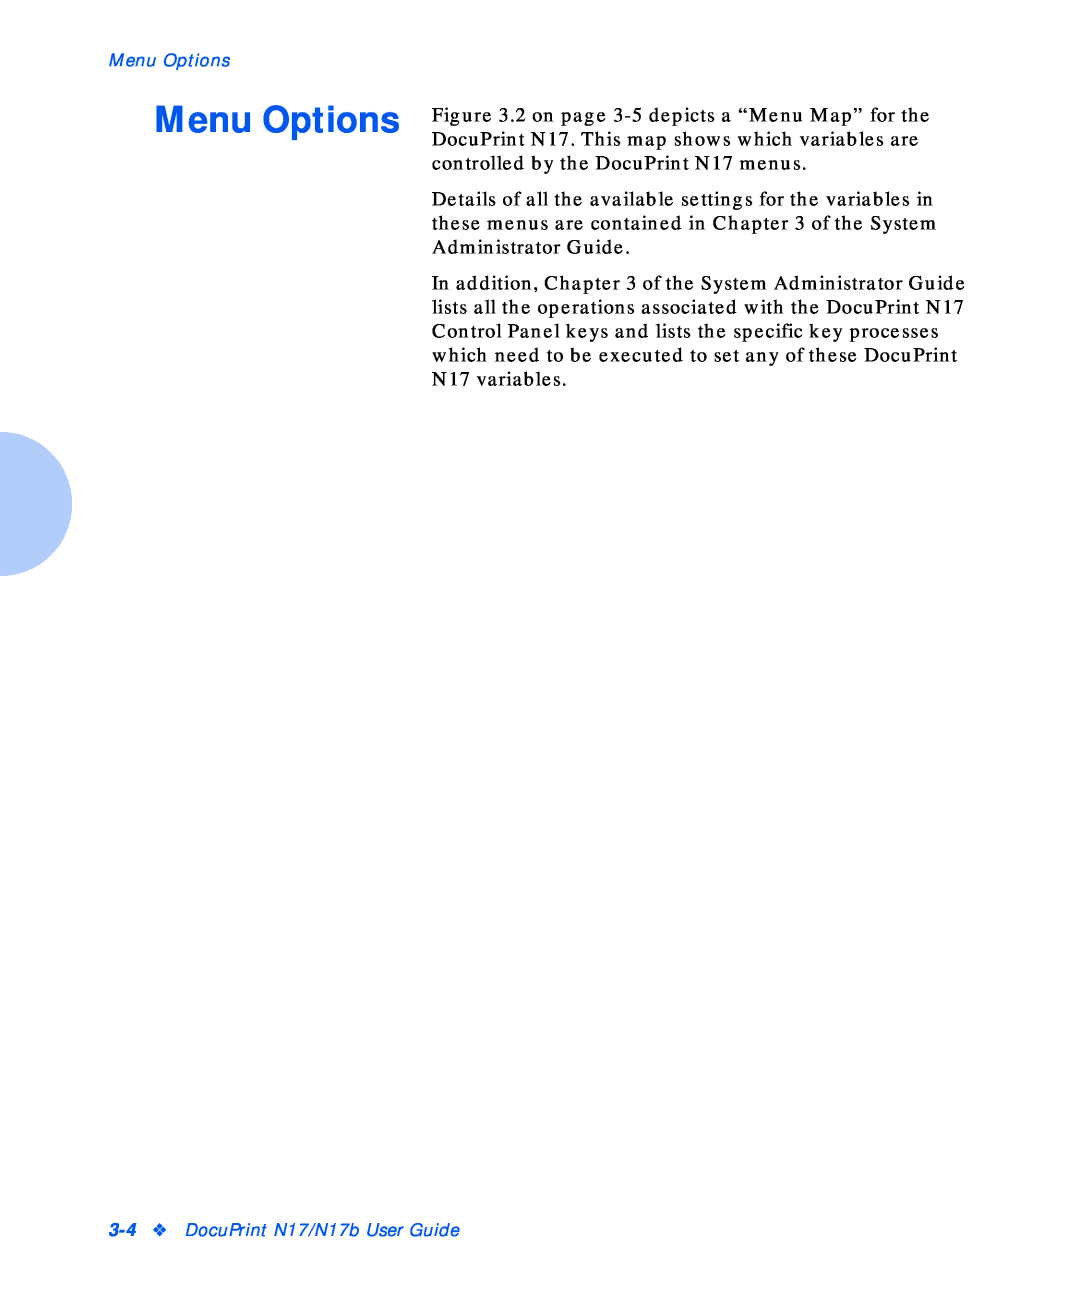 Xerox manual Menu Options, DocuPrint N17/N17b User Guide 